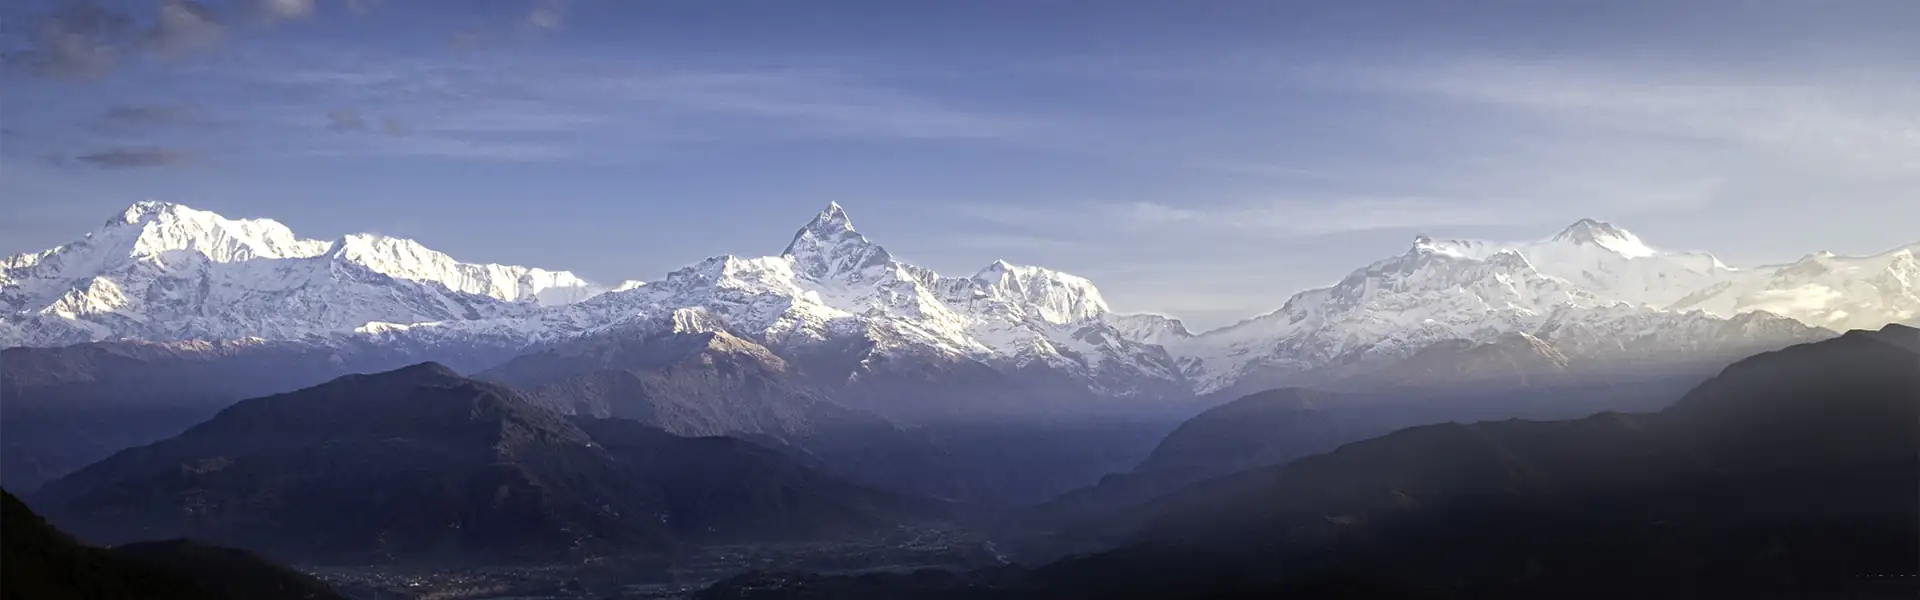 Sarangkot- A Mountain Nestling a Pokhara Village